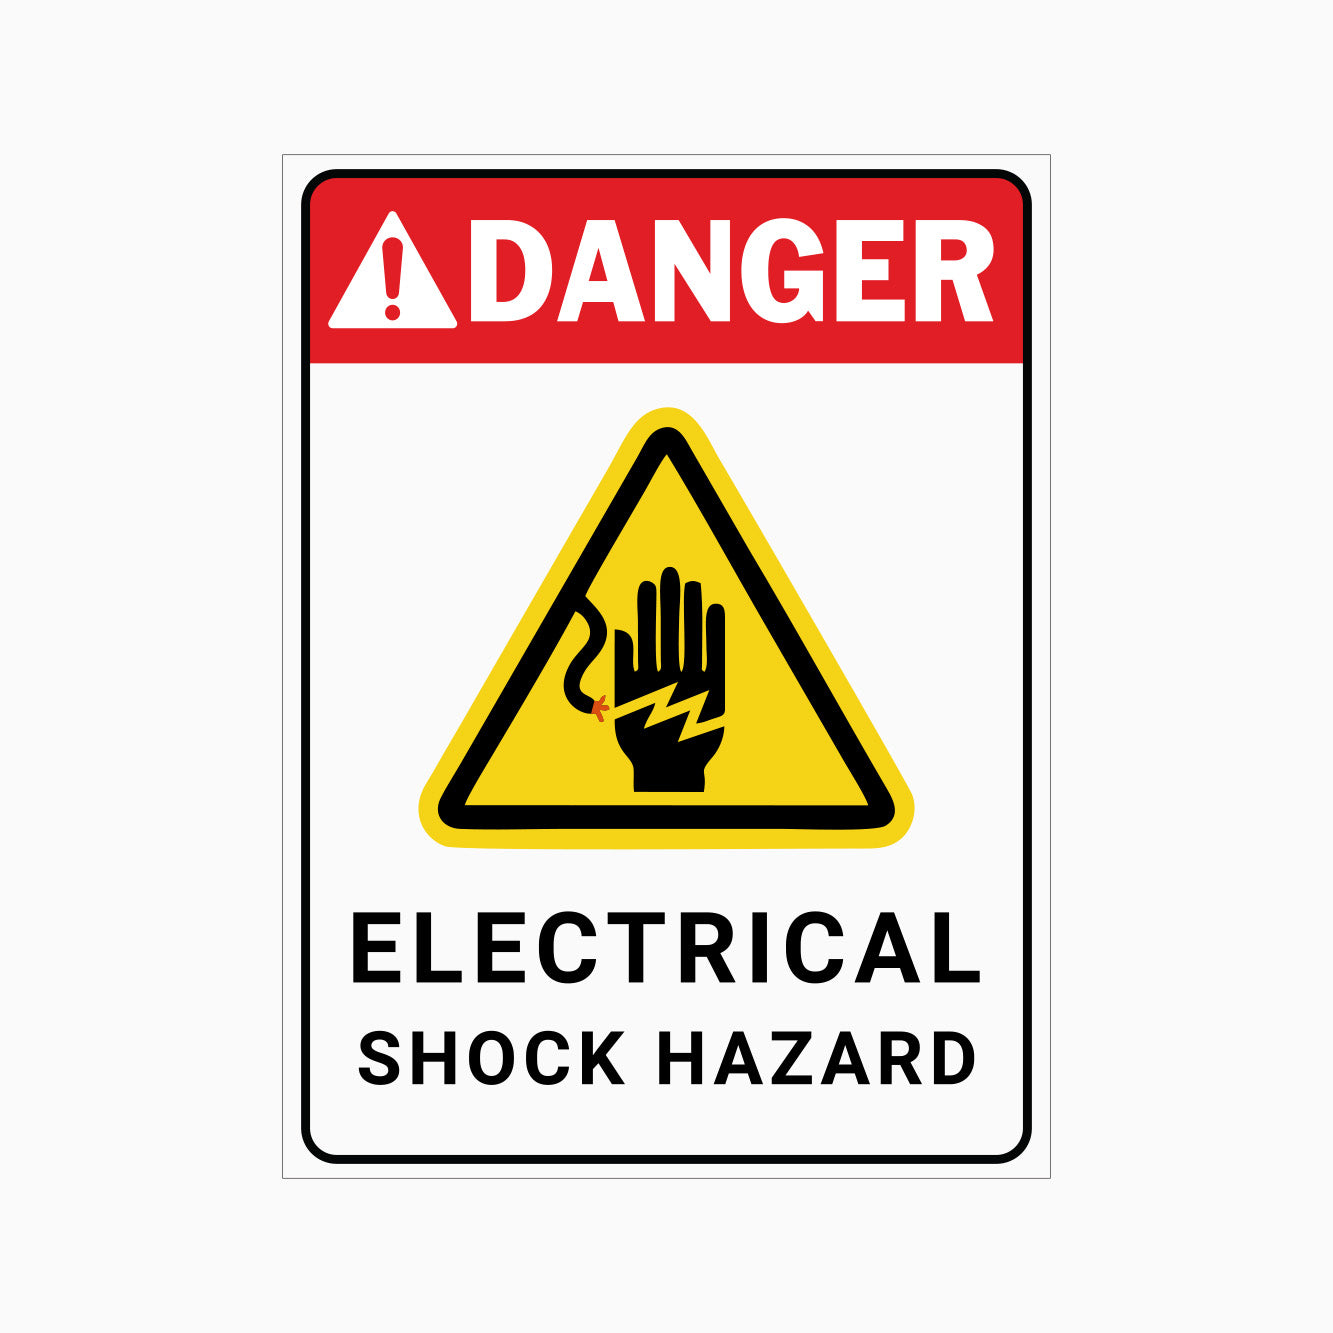 DANGER ELECTRICAL SHOCK HAZARD SIGN